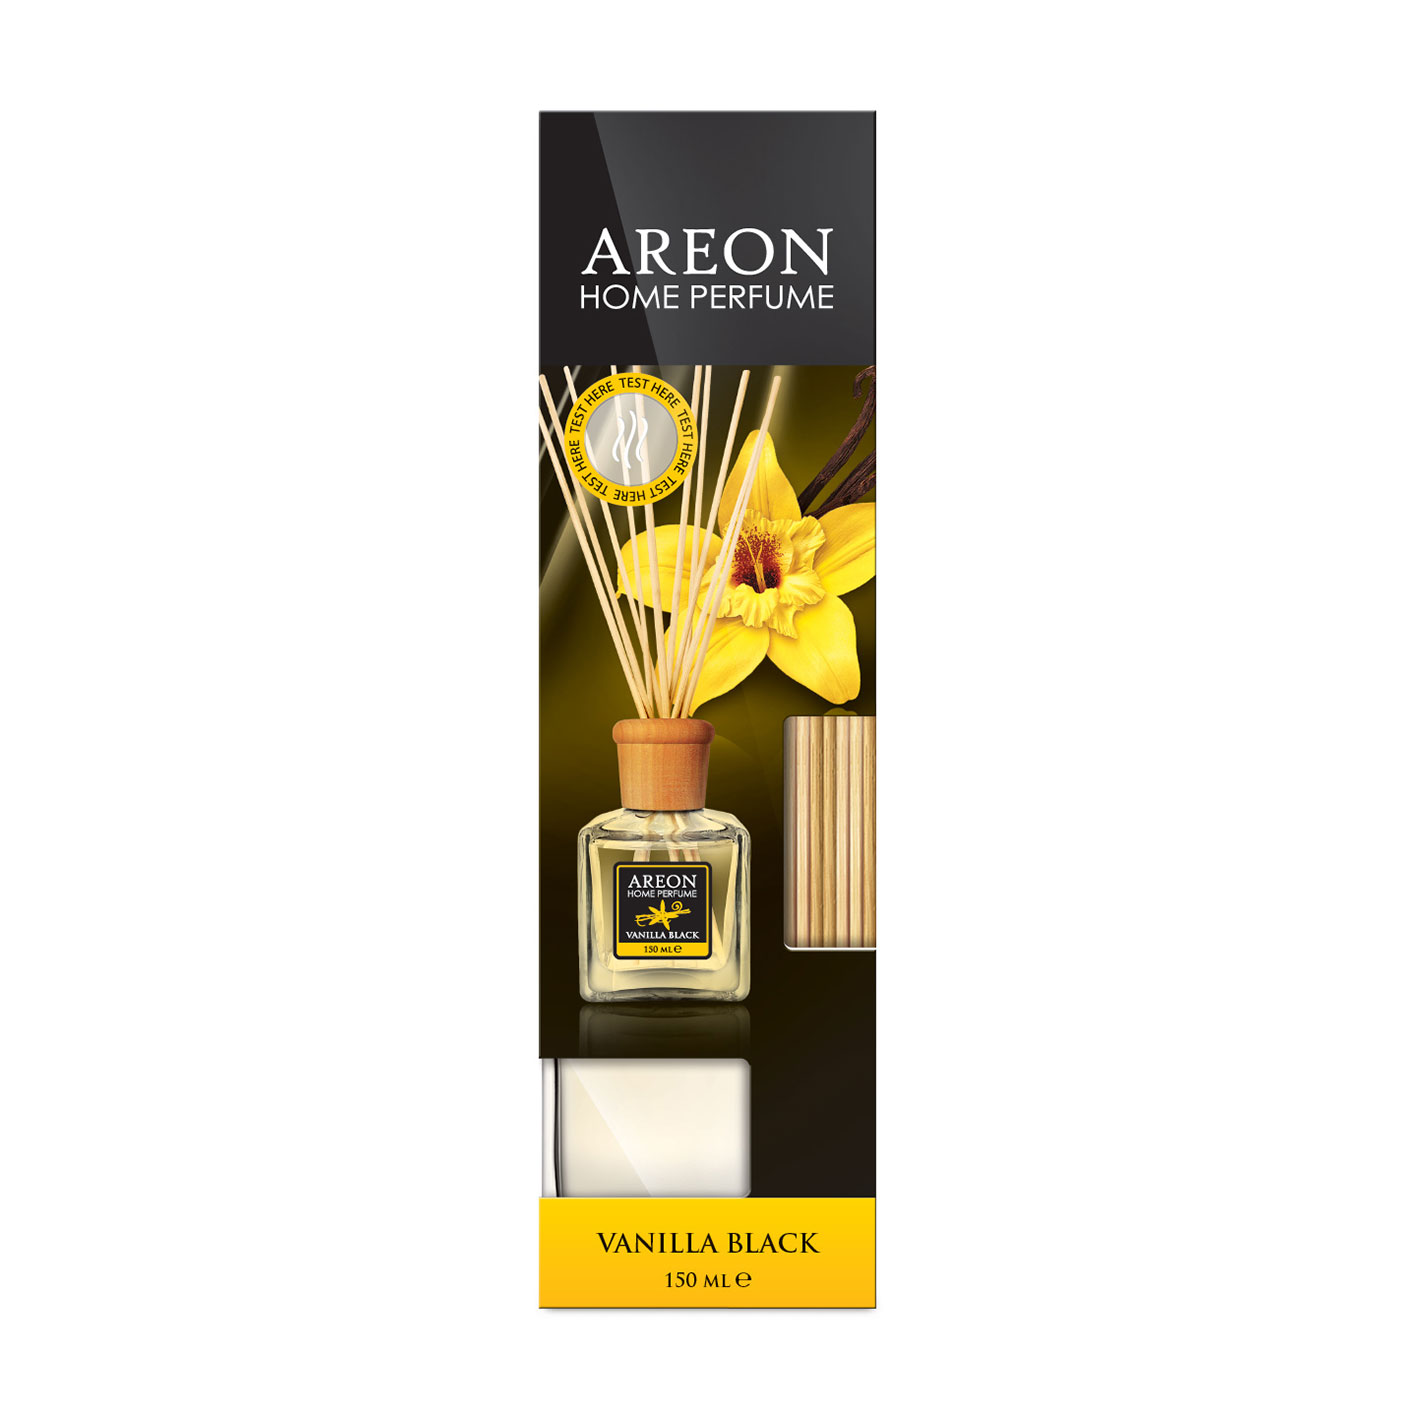 Areon Home Perfume 150ml Vanilla Black